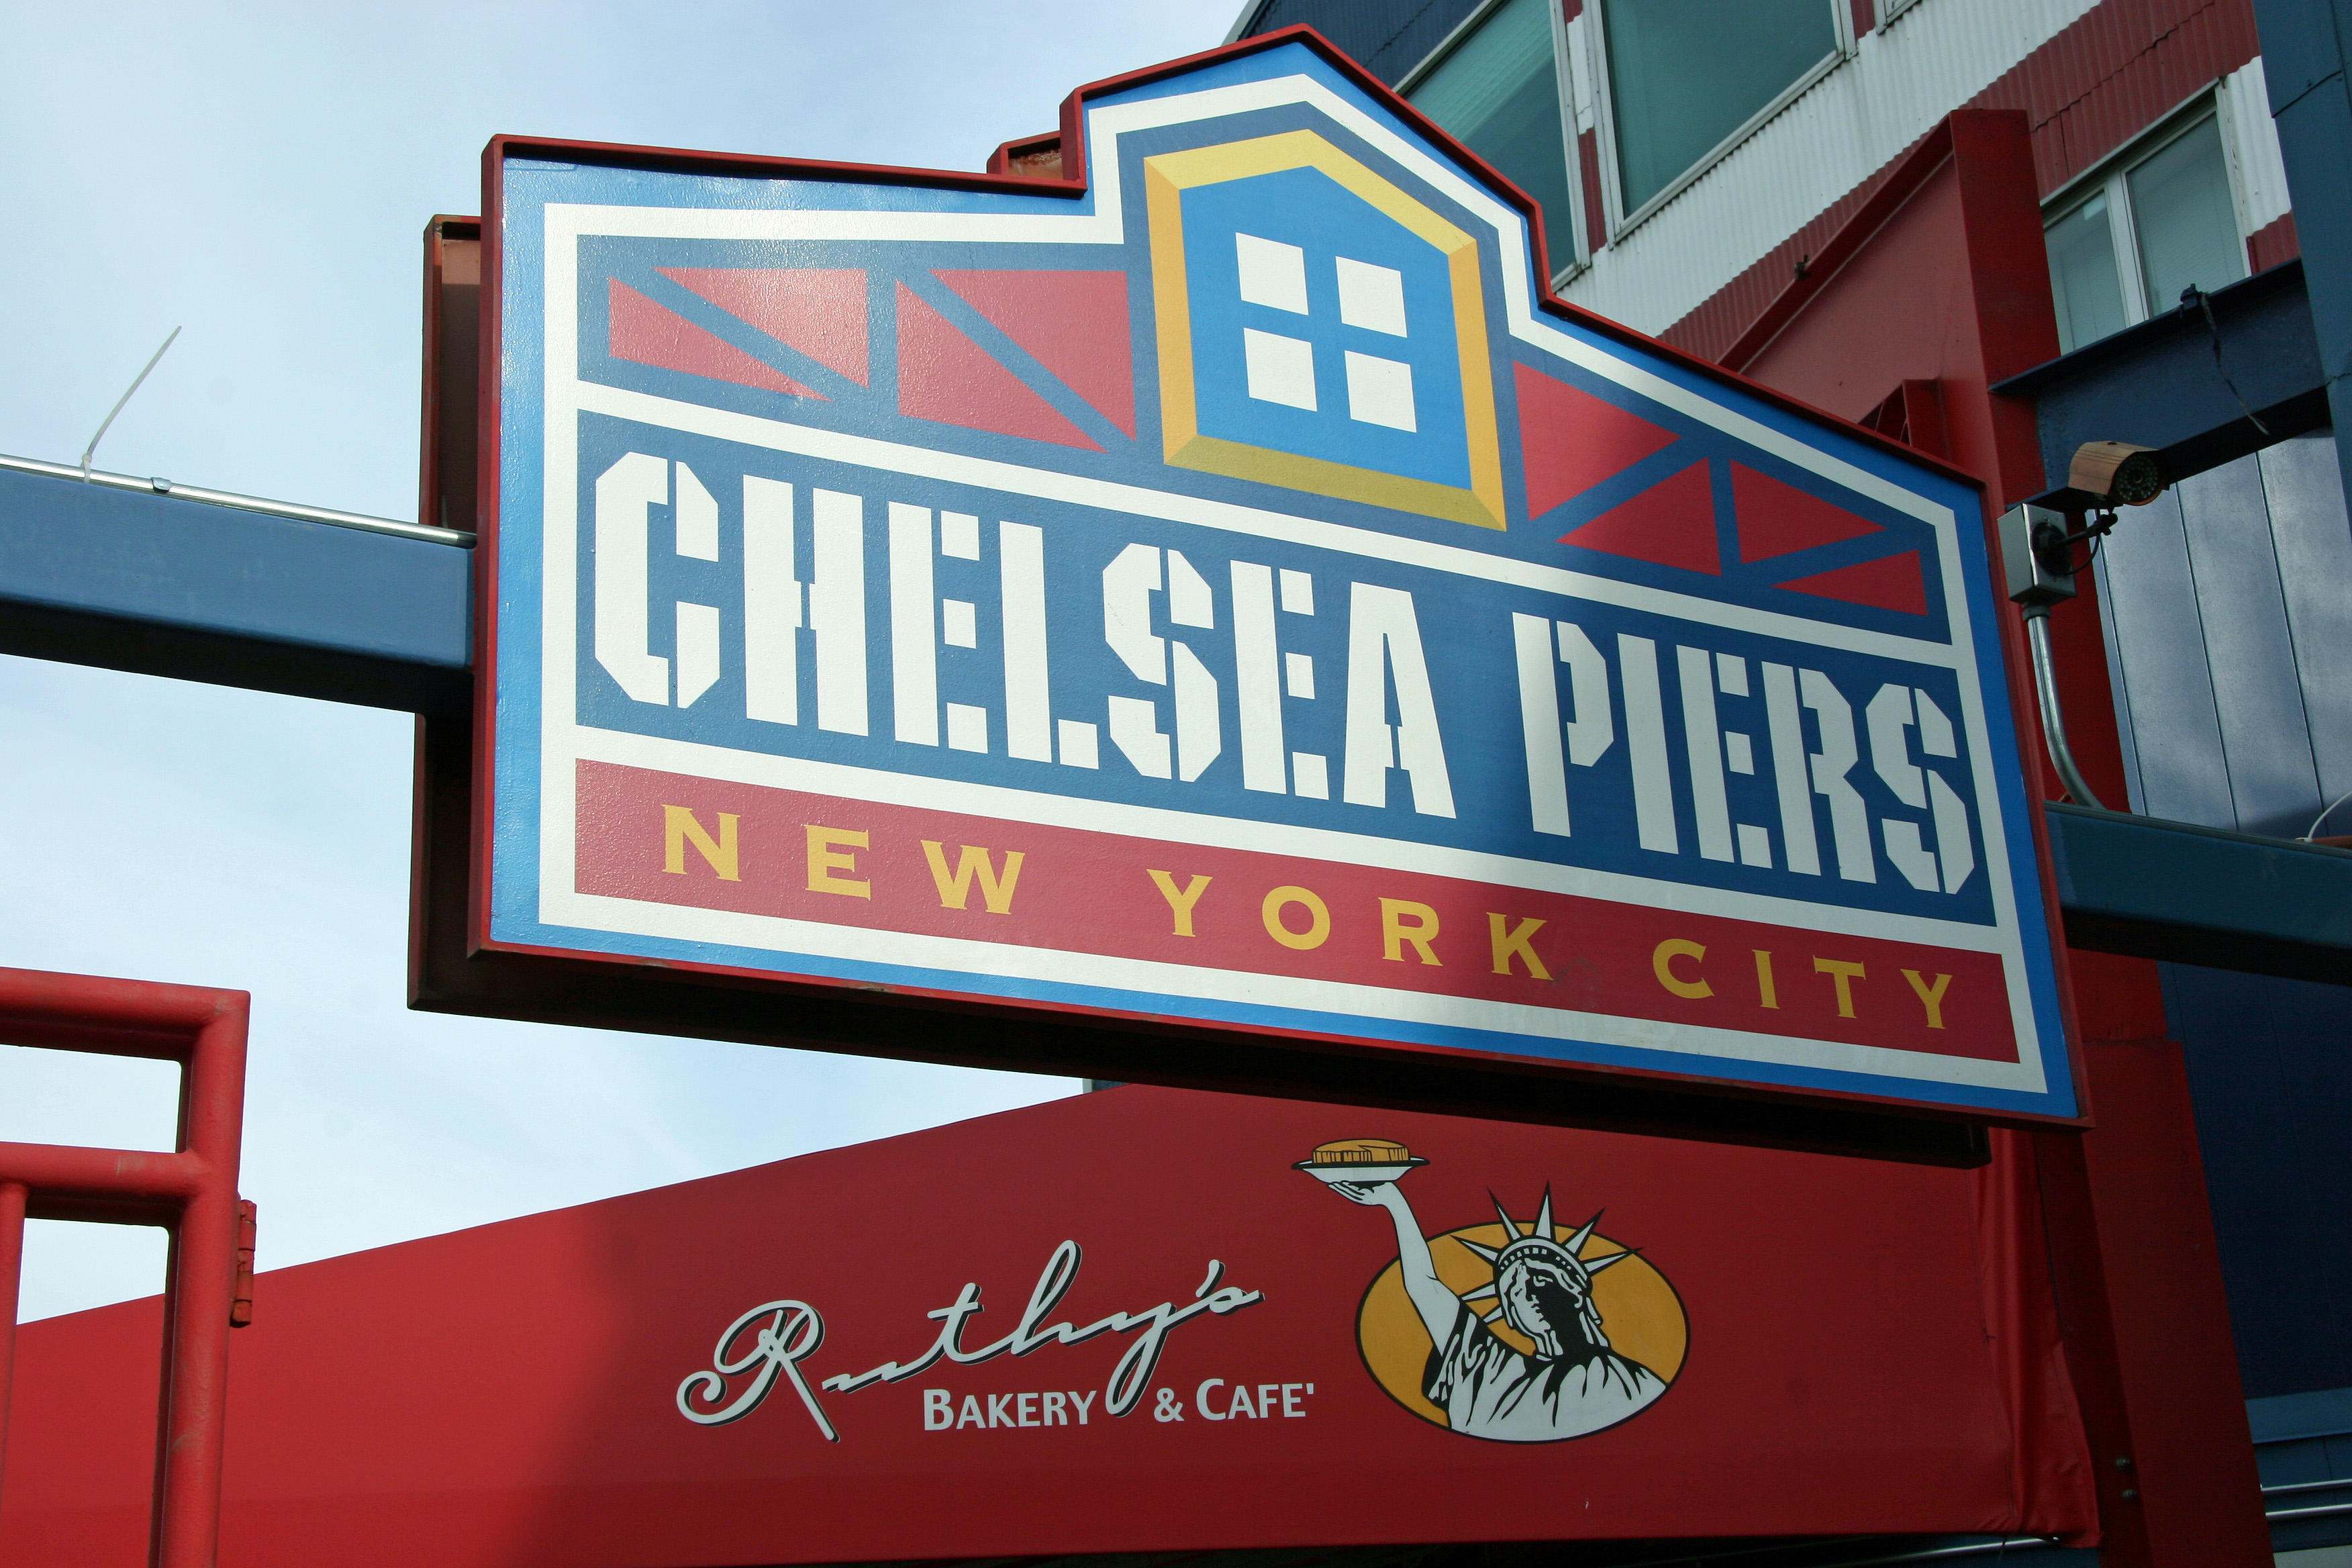 Chelsea Pier - Ruthys Bakery & Cafe